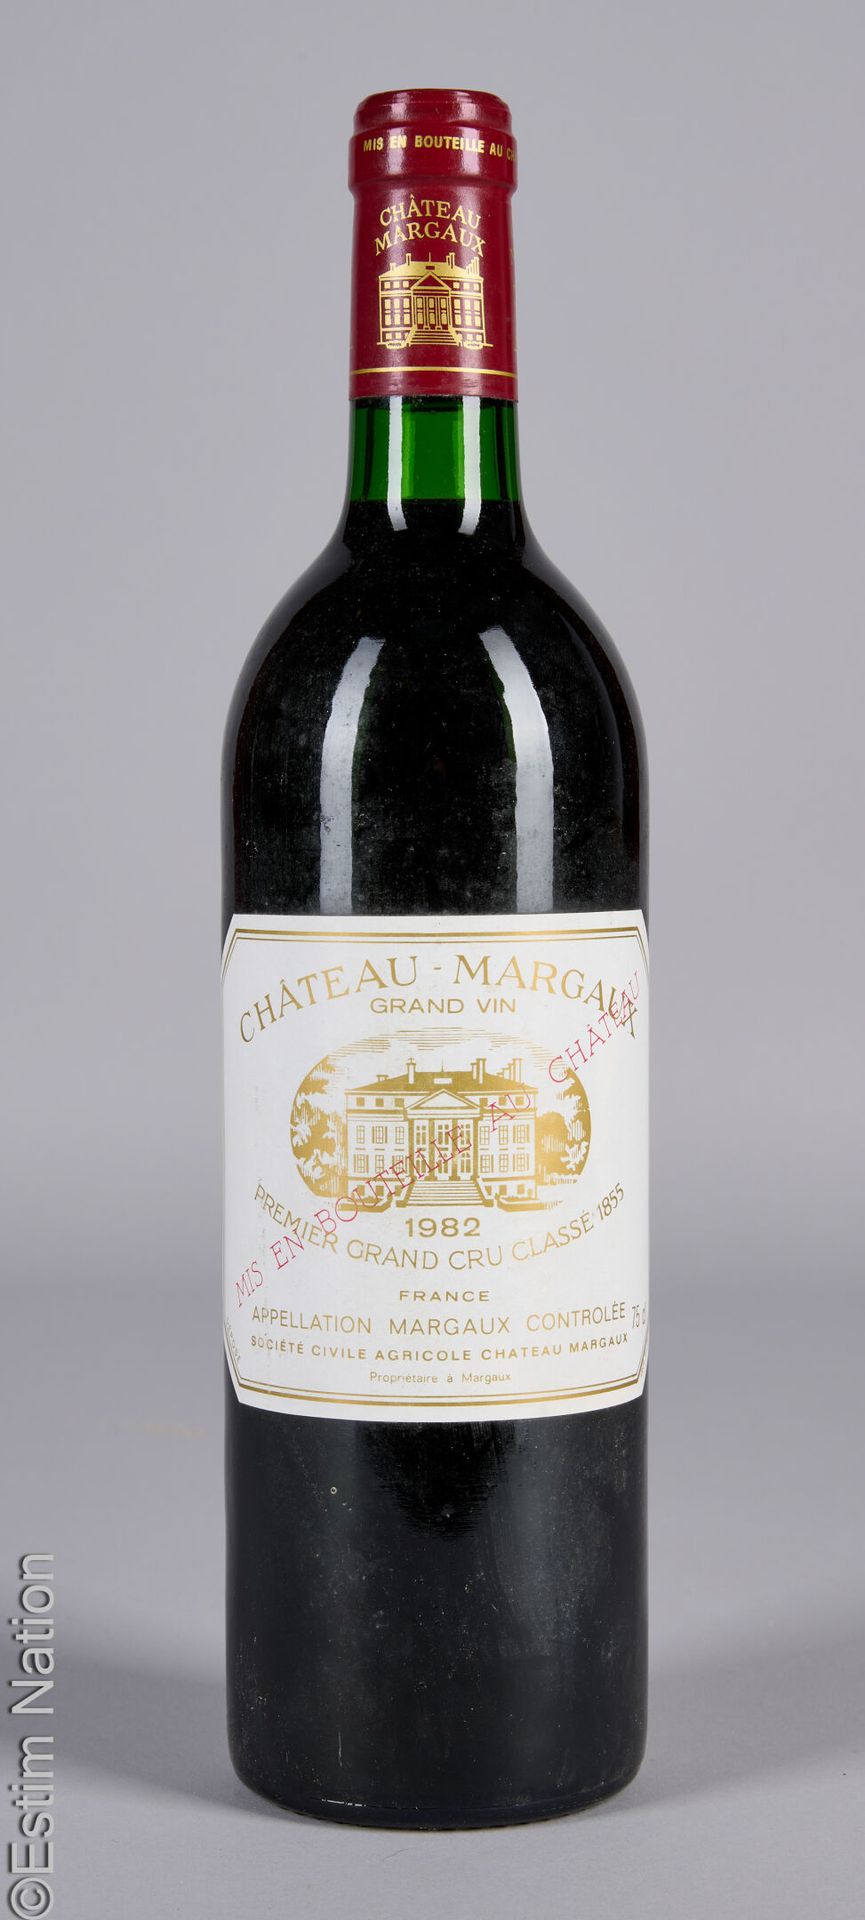 BORDEAUX 1 bottiglia CHÂTEAU MARGAUX 1982 1er GCC Margaux
(N. Tlb, E. F, m)